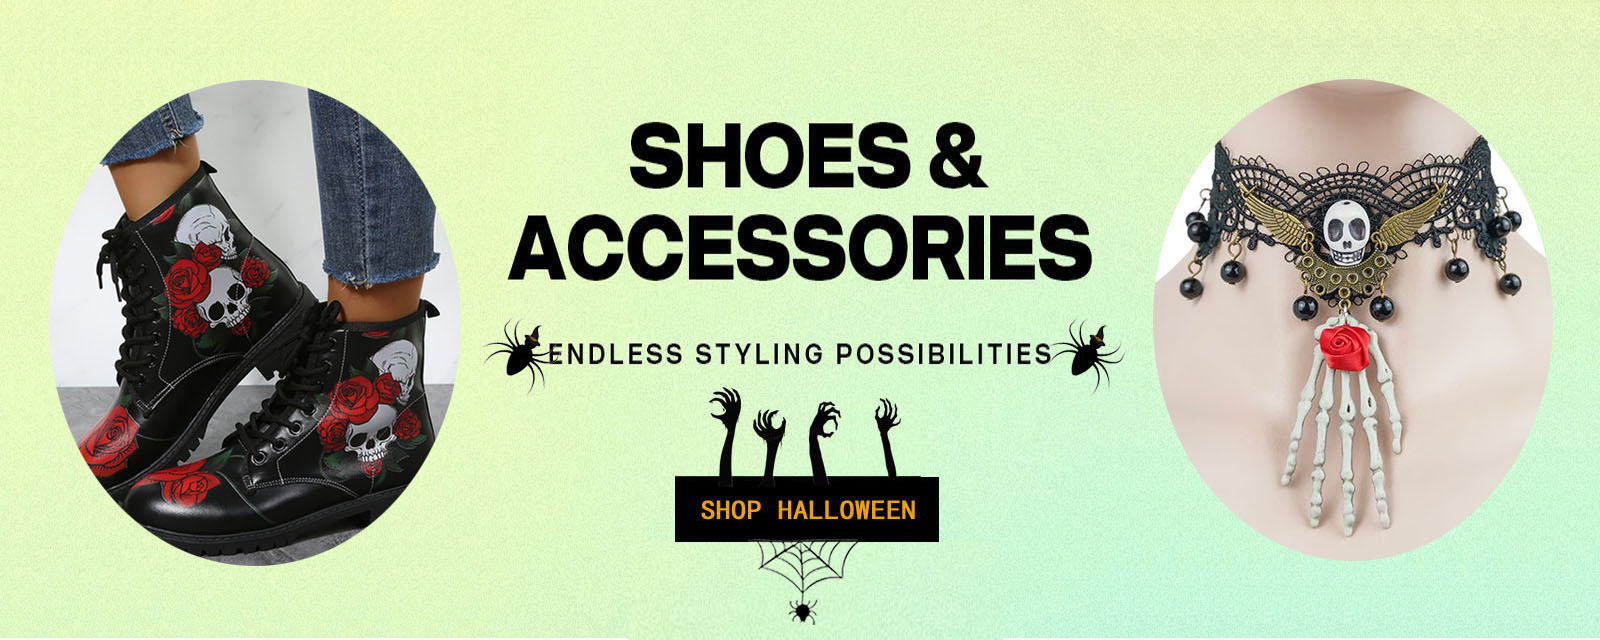 Vente en gros de chaussures, bijoux et décorations d'Halloween